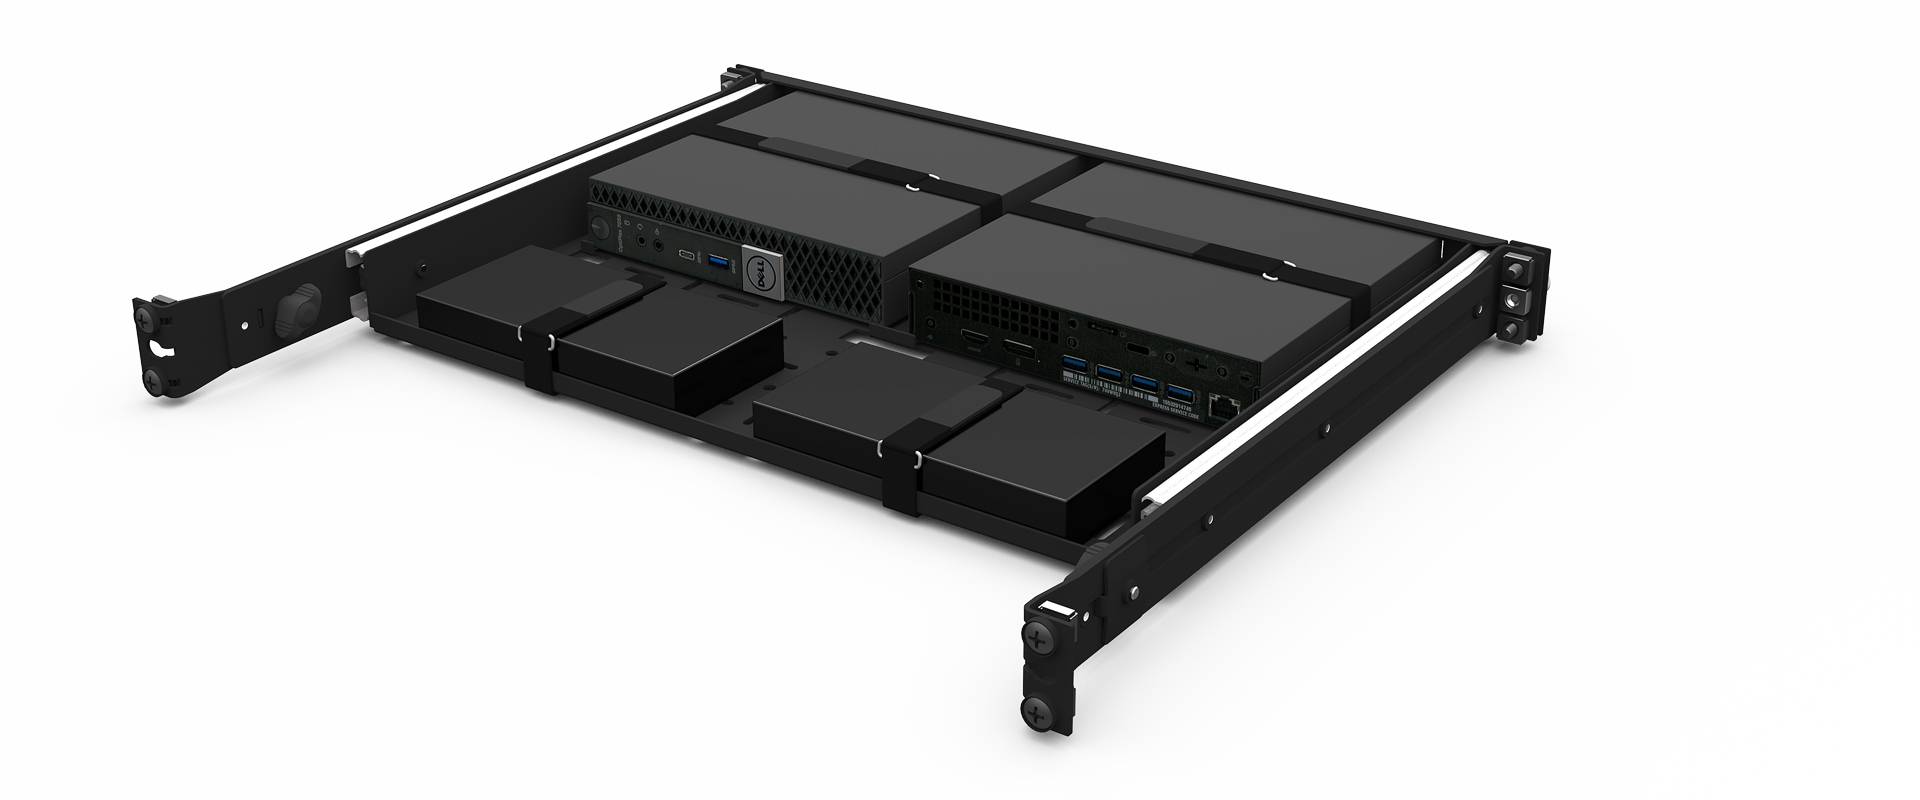 2x Dell Optiplex Micro Series rack mount kit